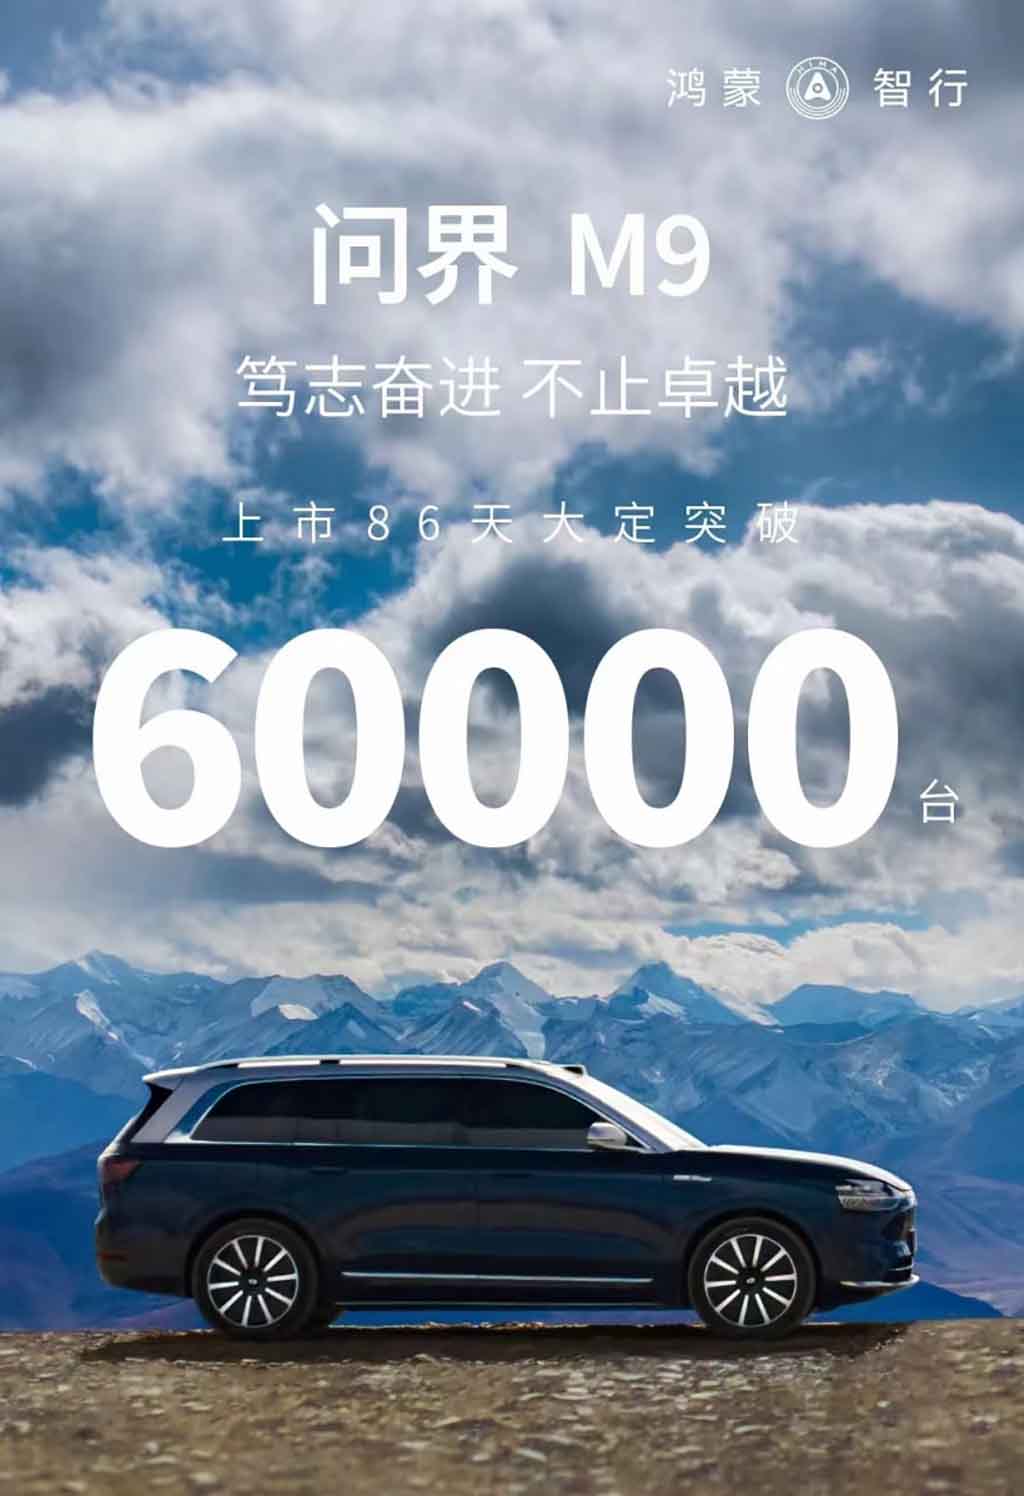 Huawei AITO M9 60000 units